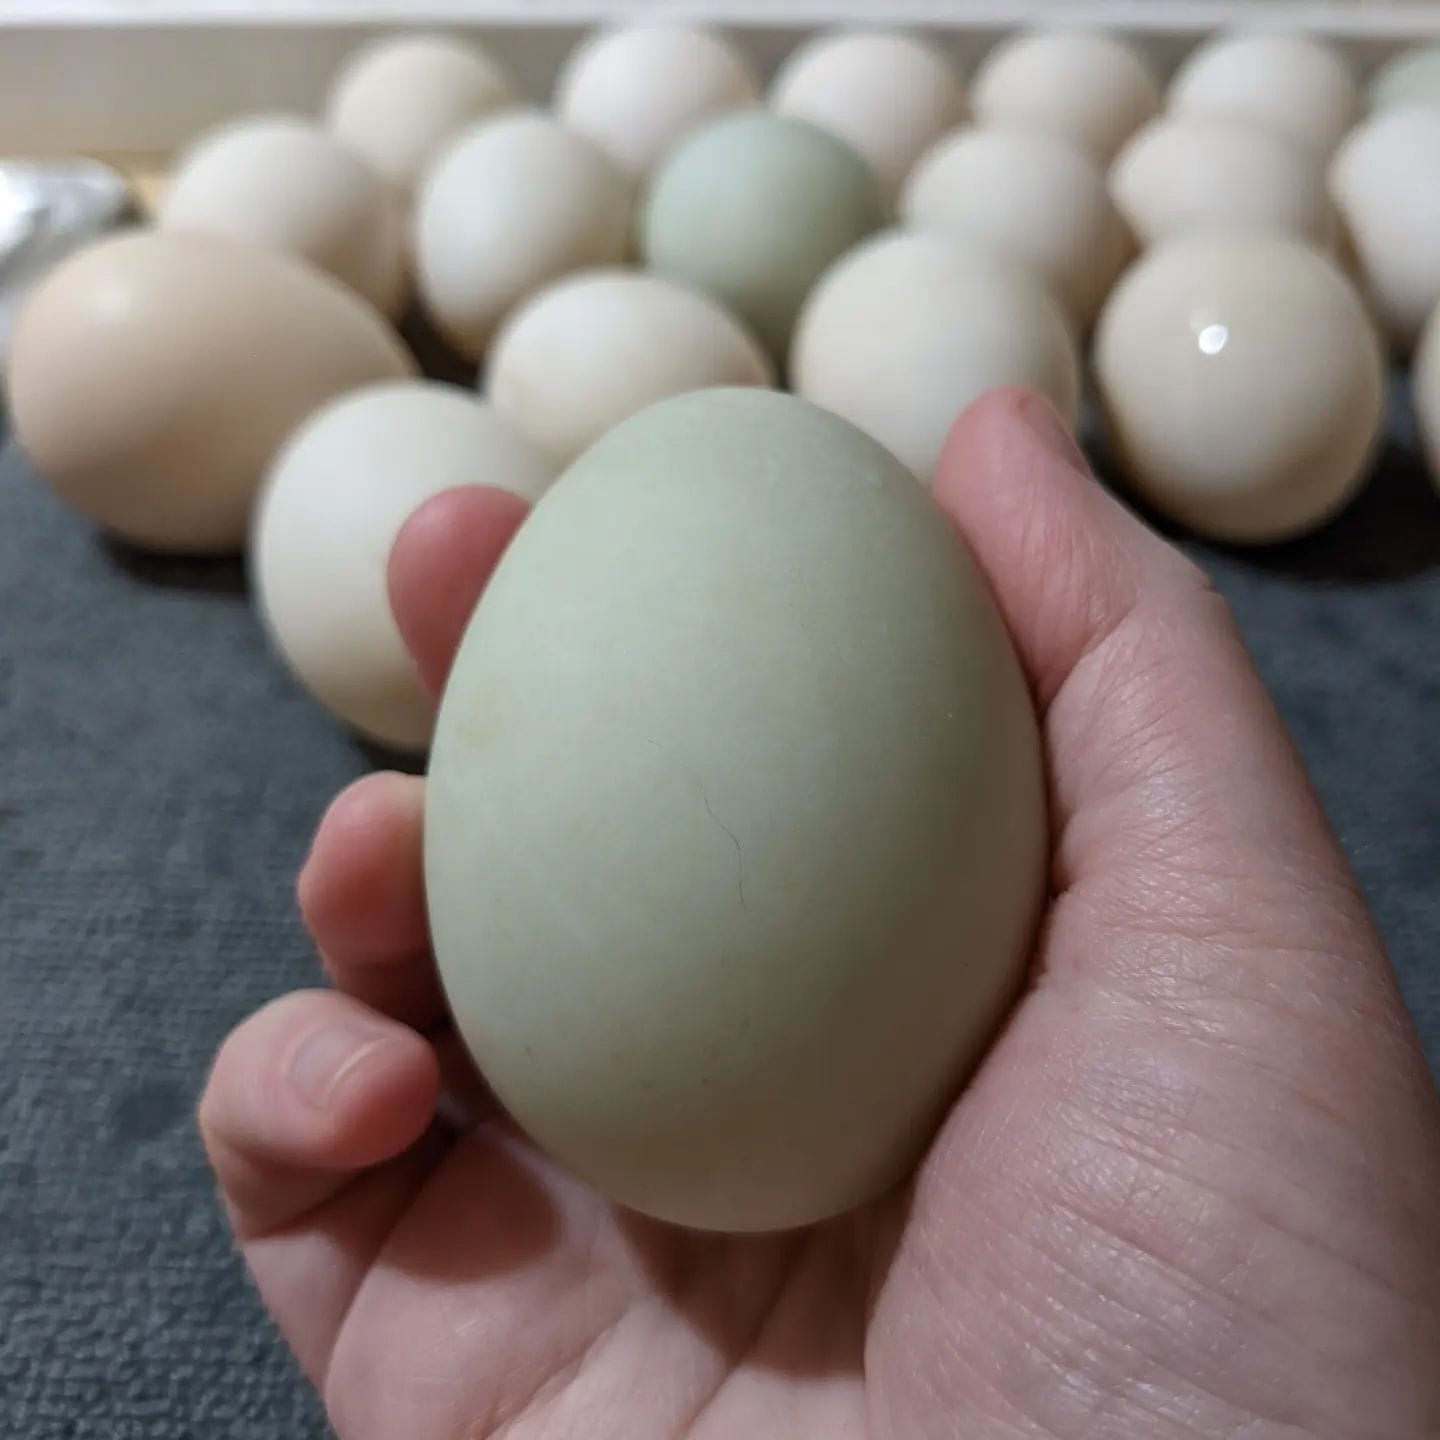 Fresh duck eggs.